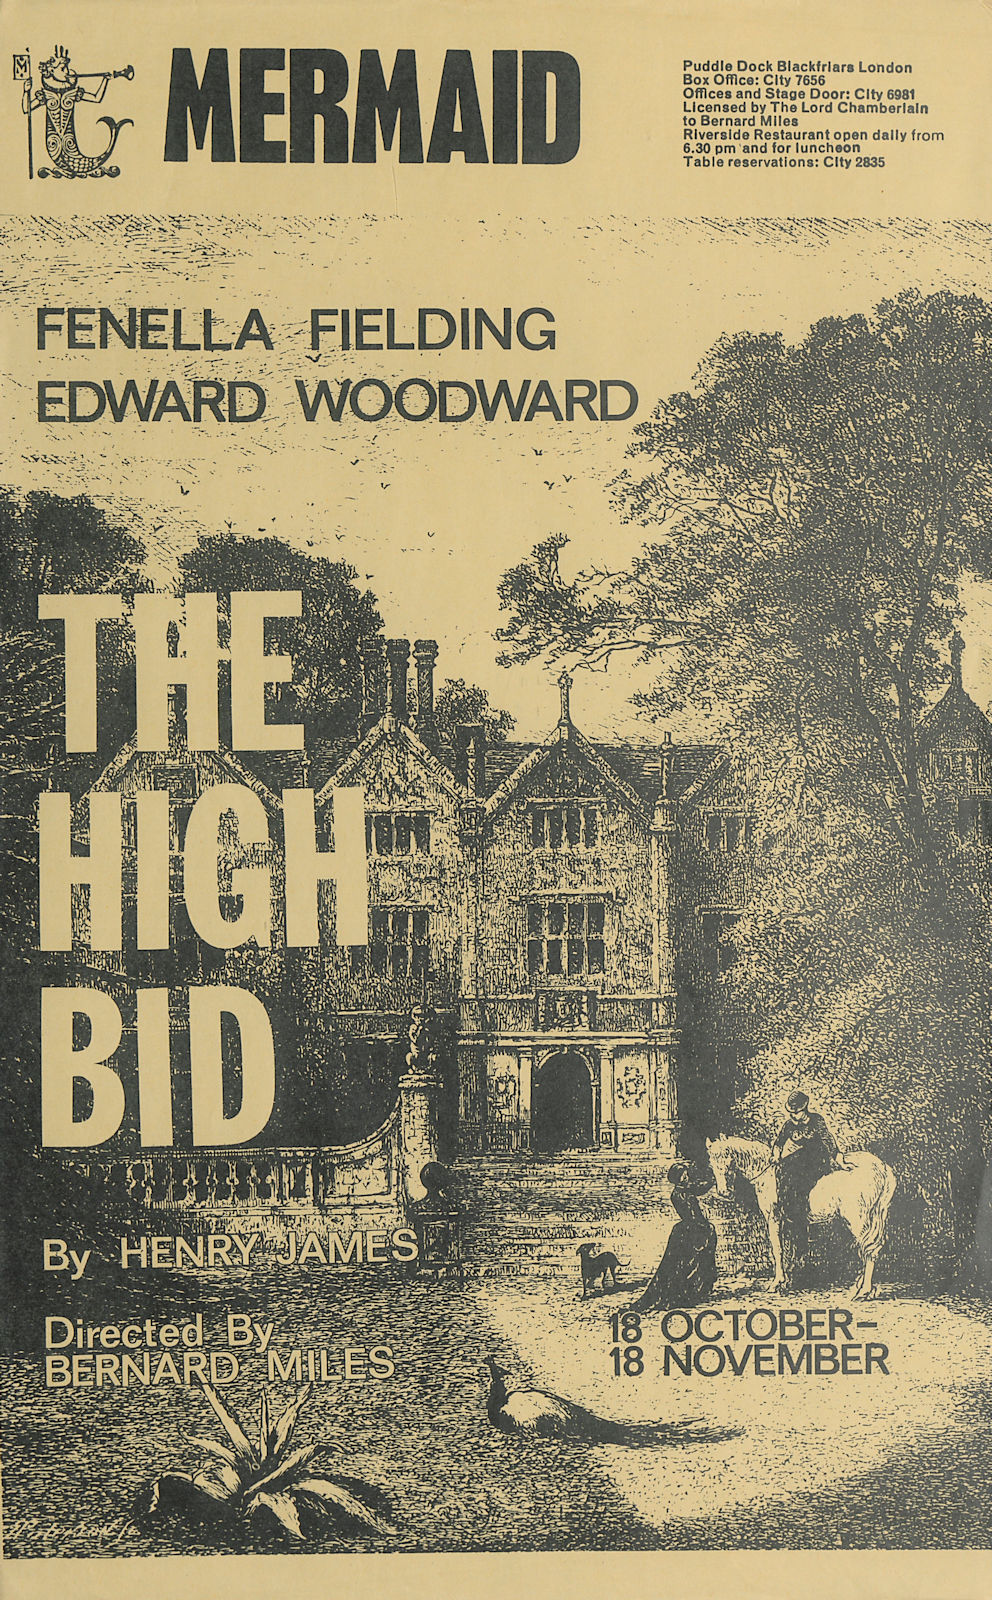 Associate Product Mermaid Theatre. The High Bid. Henry James. Fenella Fielding. Edw. Woodward 1967